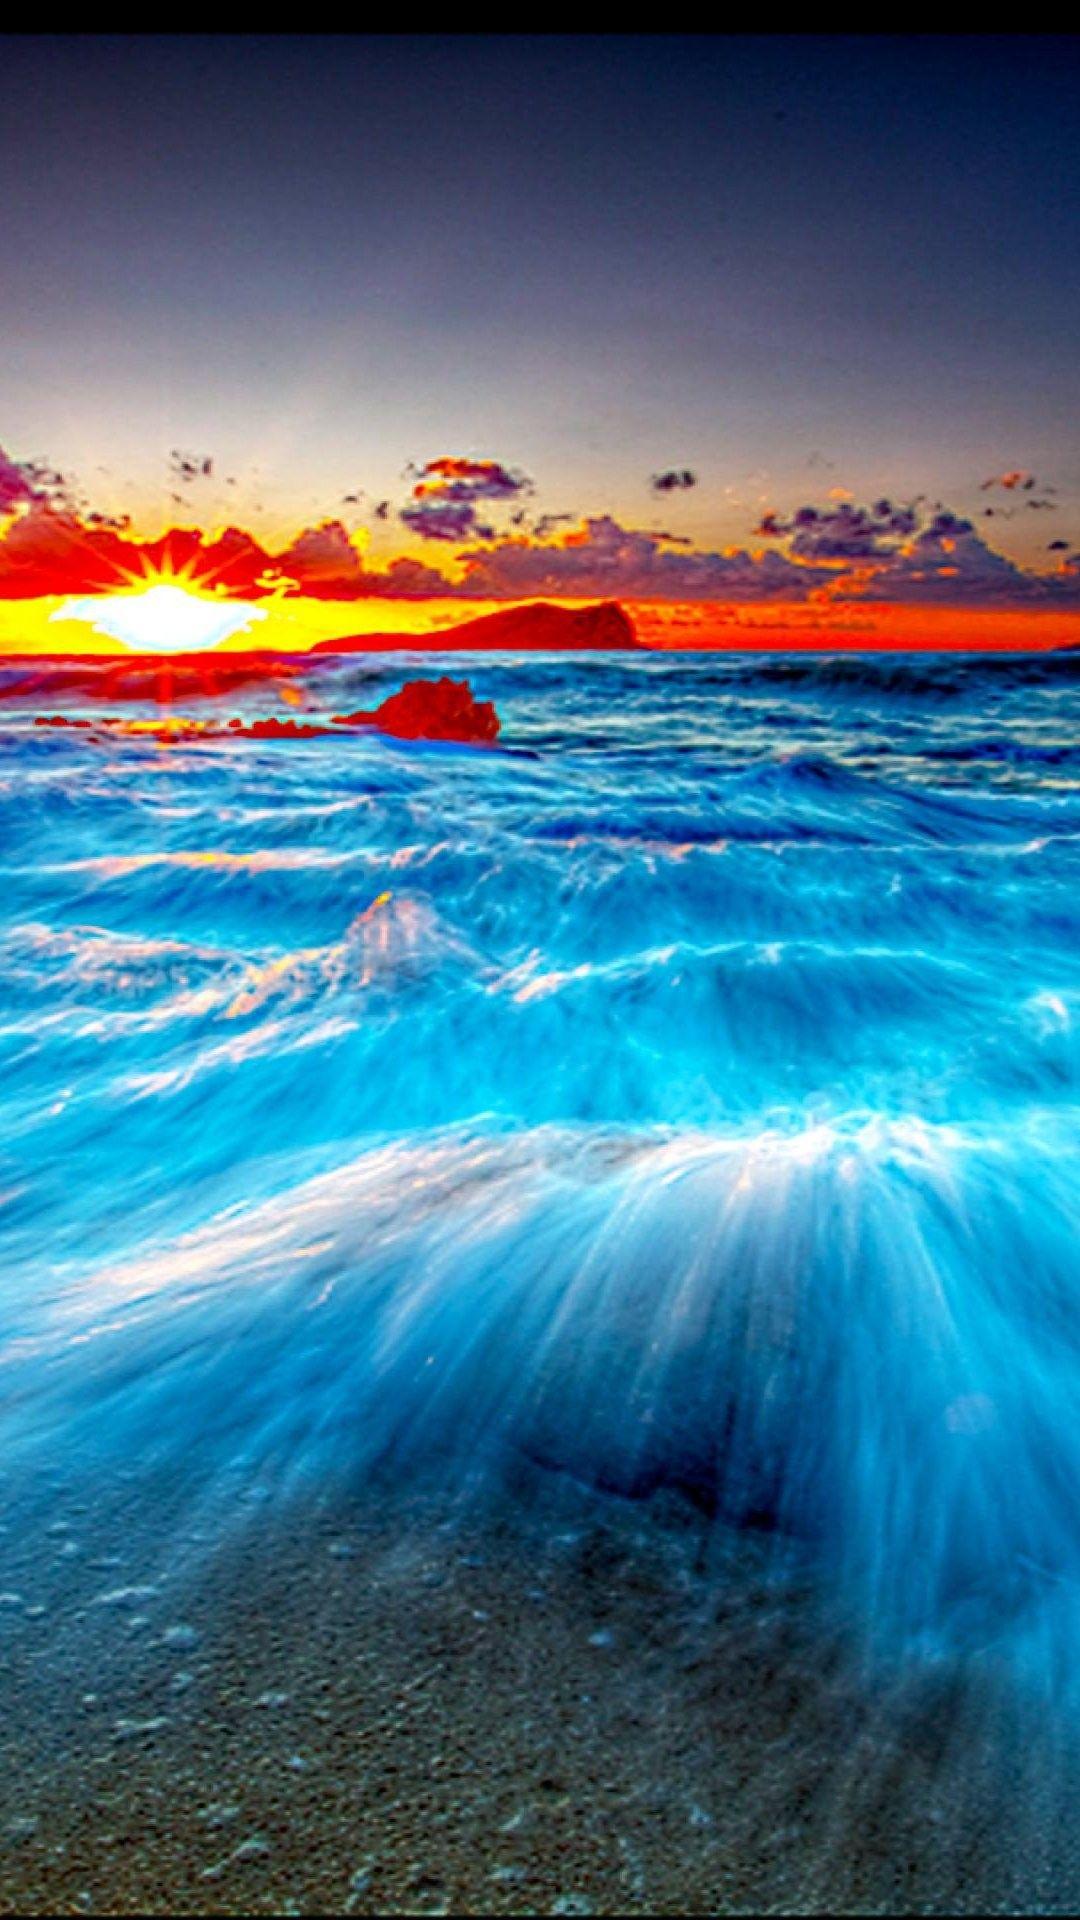 Ocean iPhone Wallpapers - Top Free Ocean iPhone ...